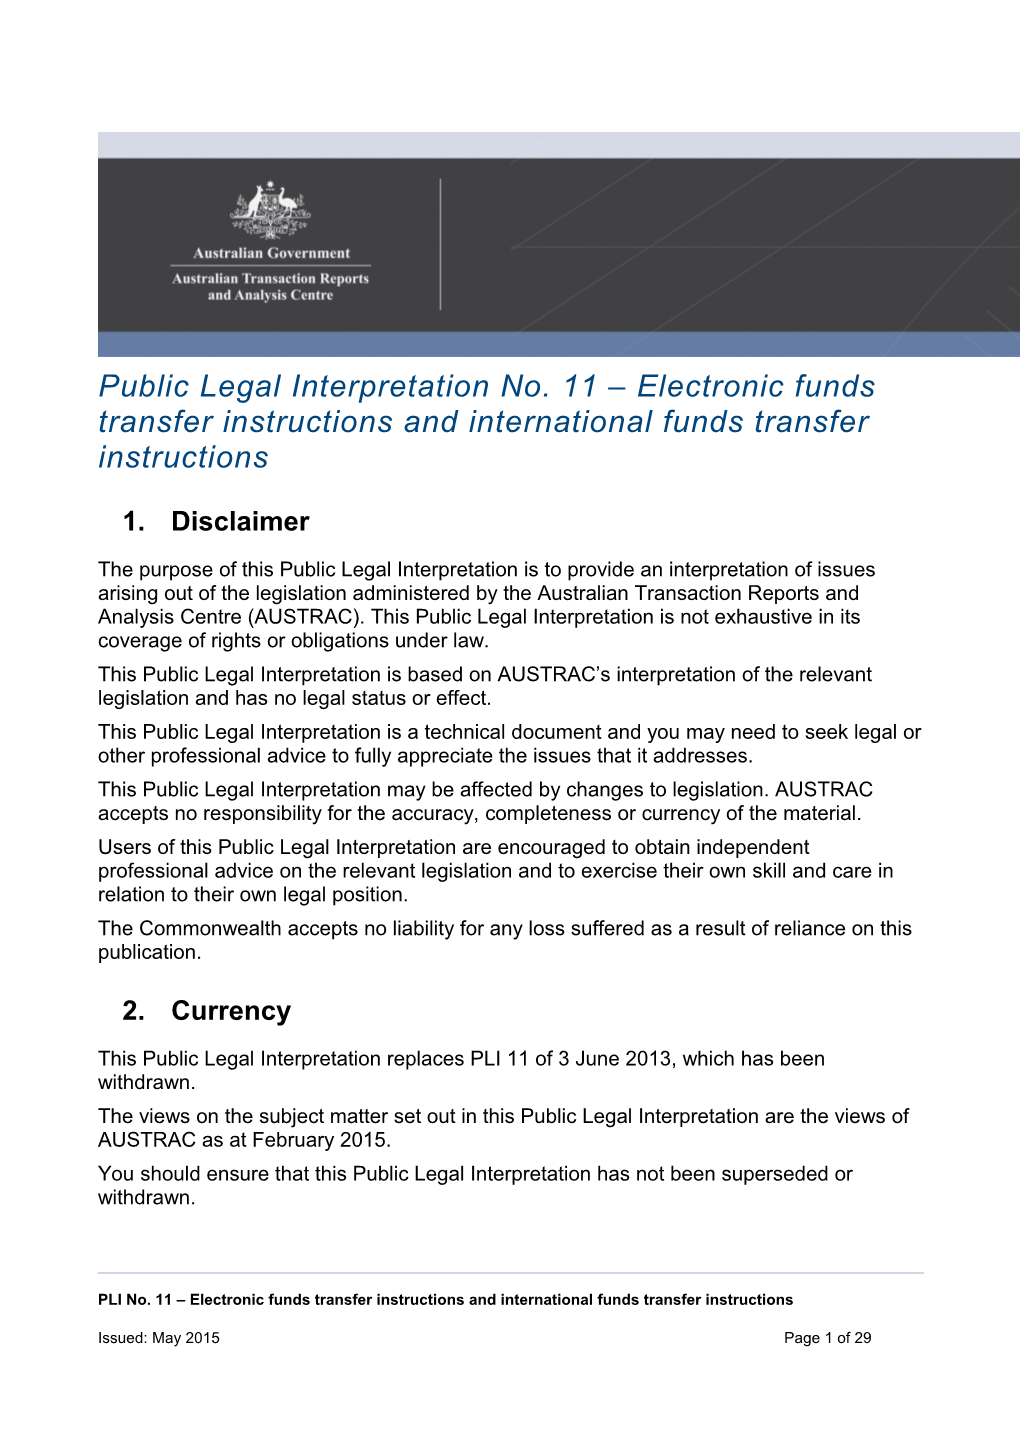 Public Legal Interpretation No. 11 Electronic Funds Transfer Instructions and International